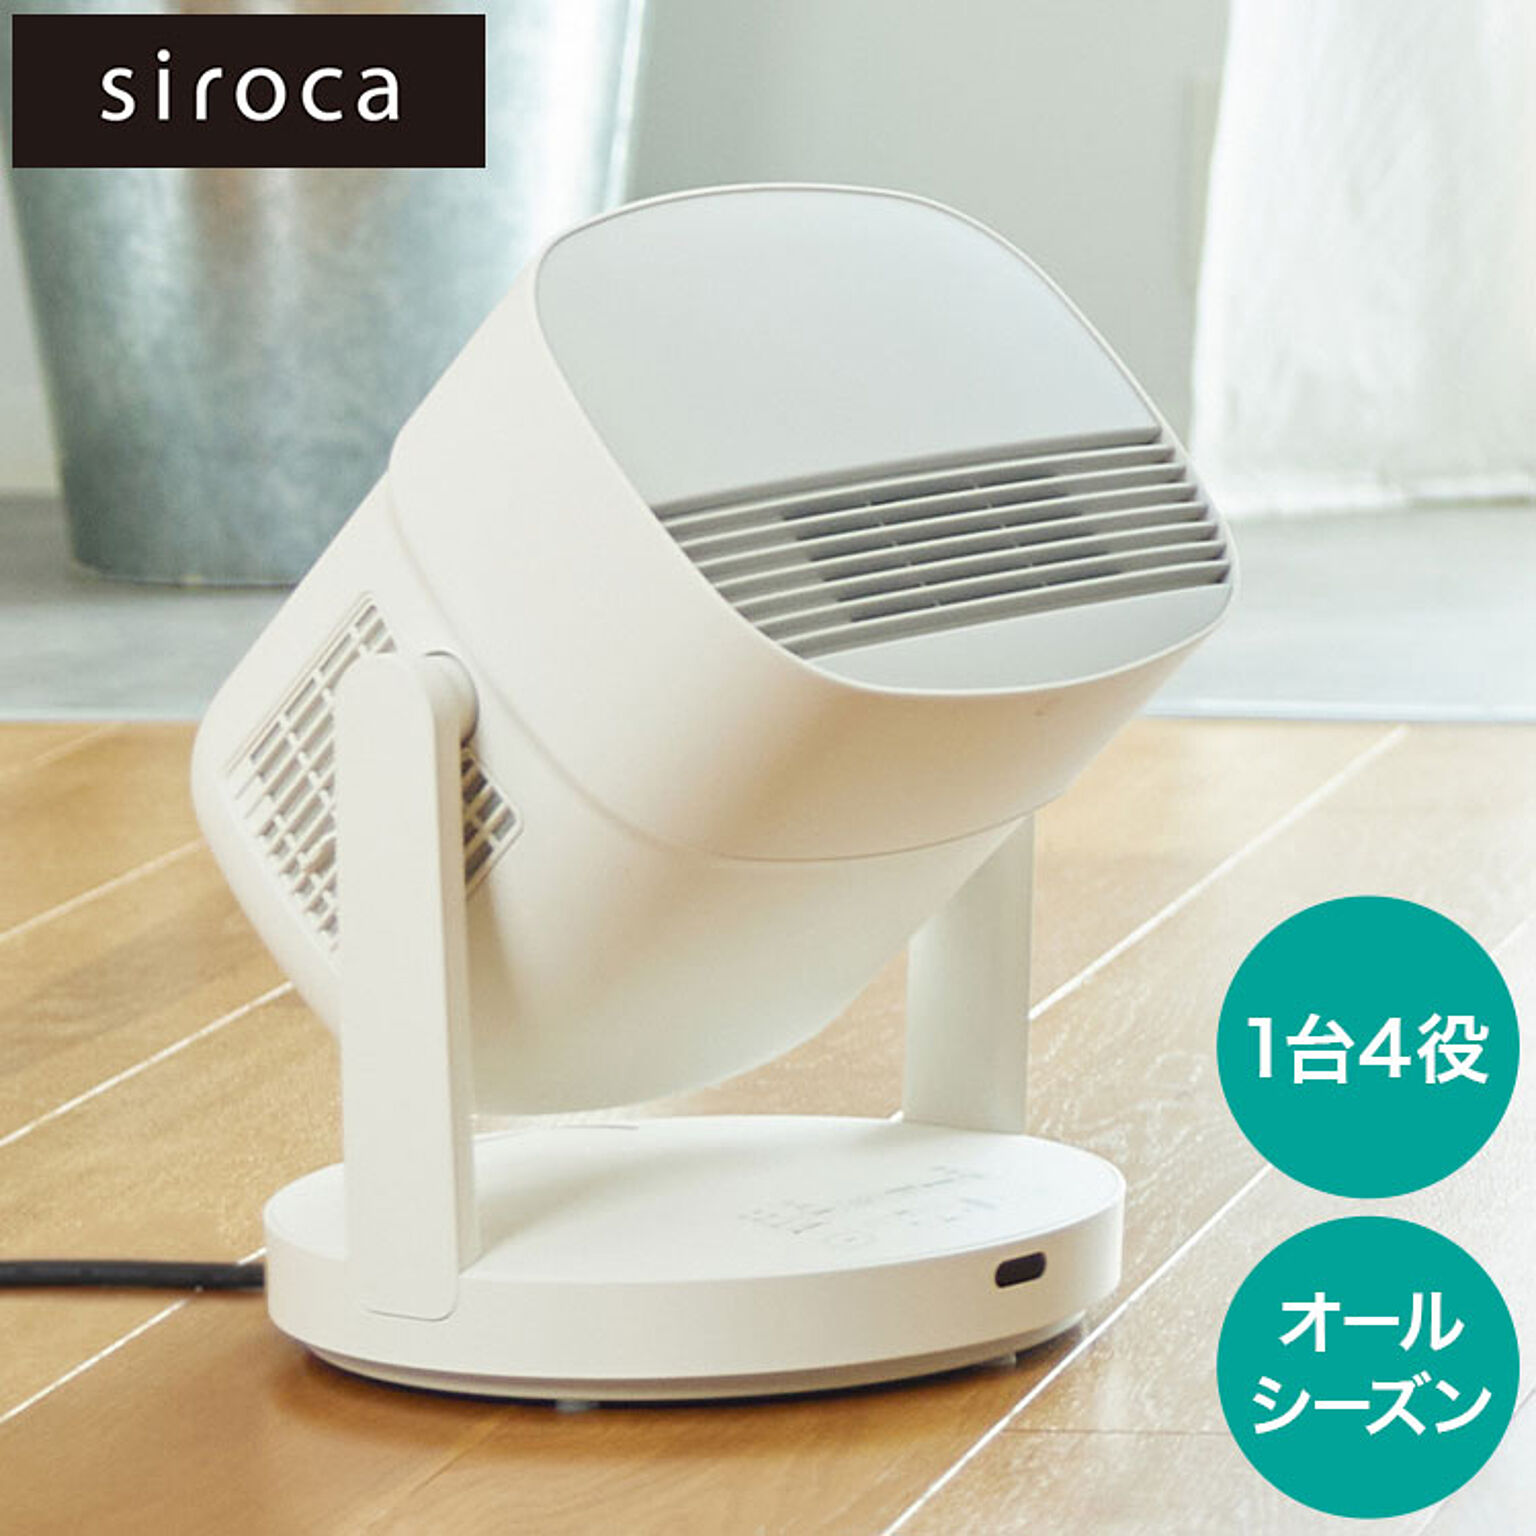 siroca HOT&COOL ポカクール 1台4役 サーキュレーター ヒーター 扇風機 衣類乾燥機 タイマー機能付き 静音 節電 省エネ 電気ヒーター 送風 SH-CD131